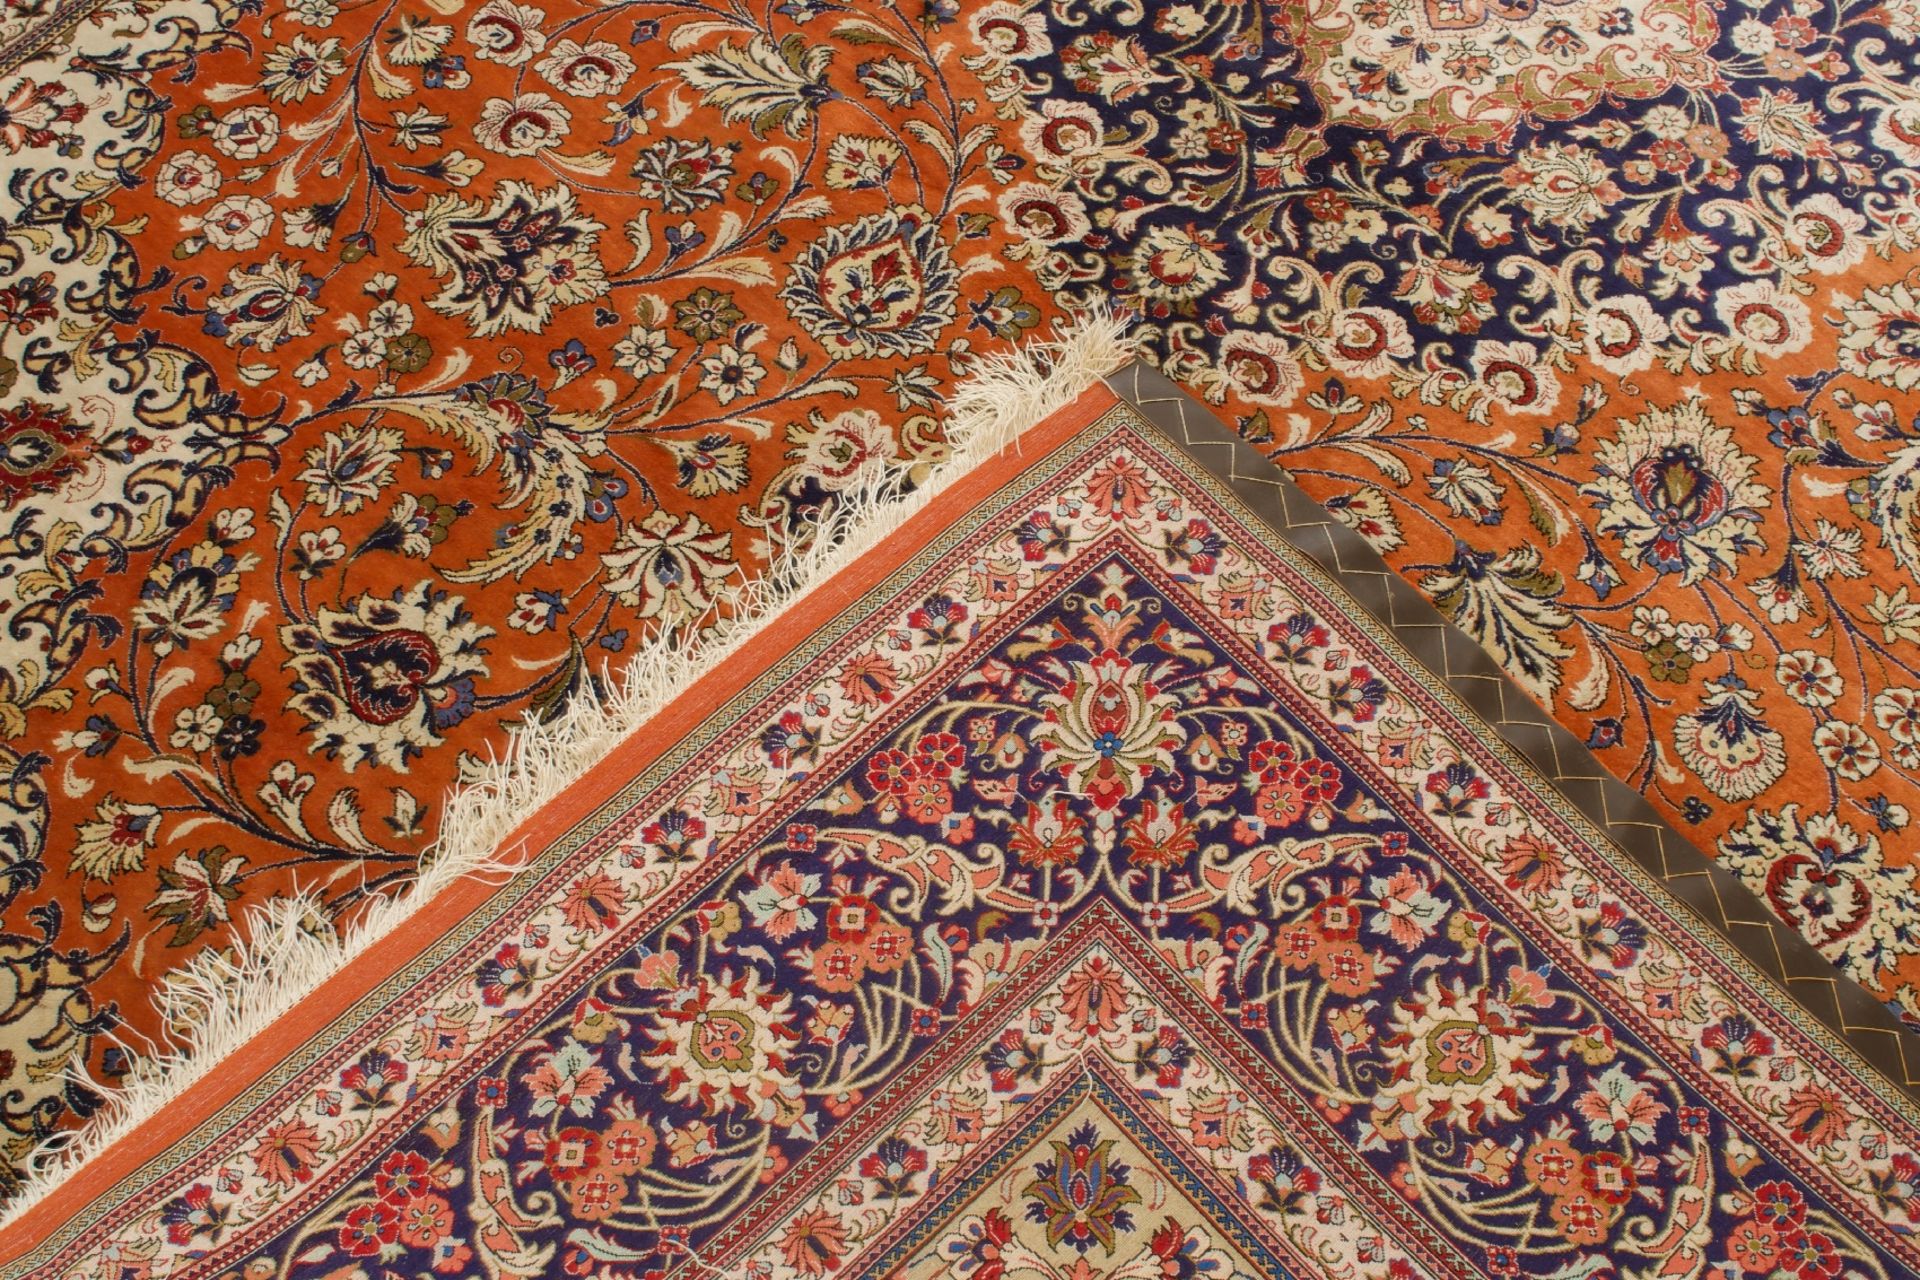 Ghom Seidenteppich Iran | Ghom silk carpet Iran - Image 2 of 6